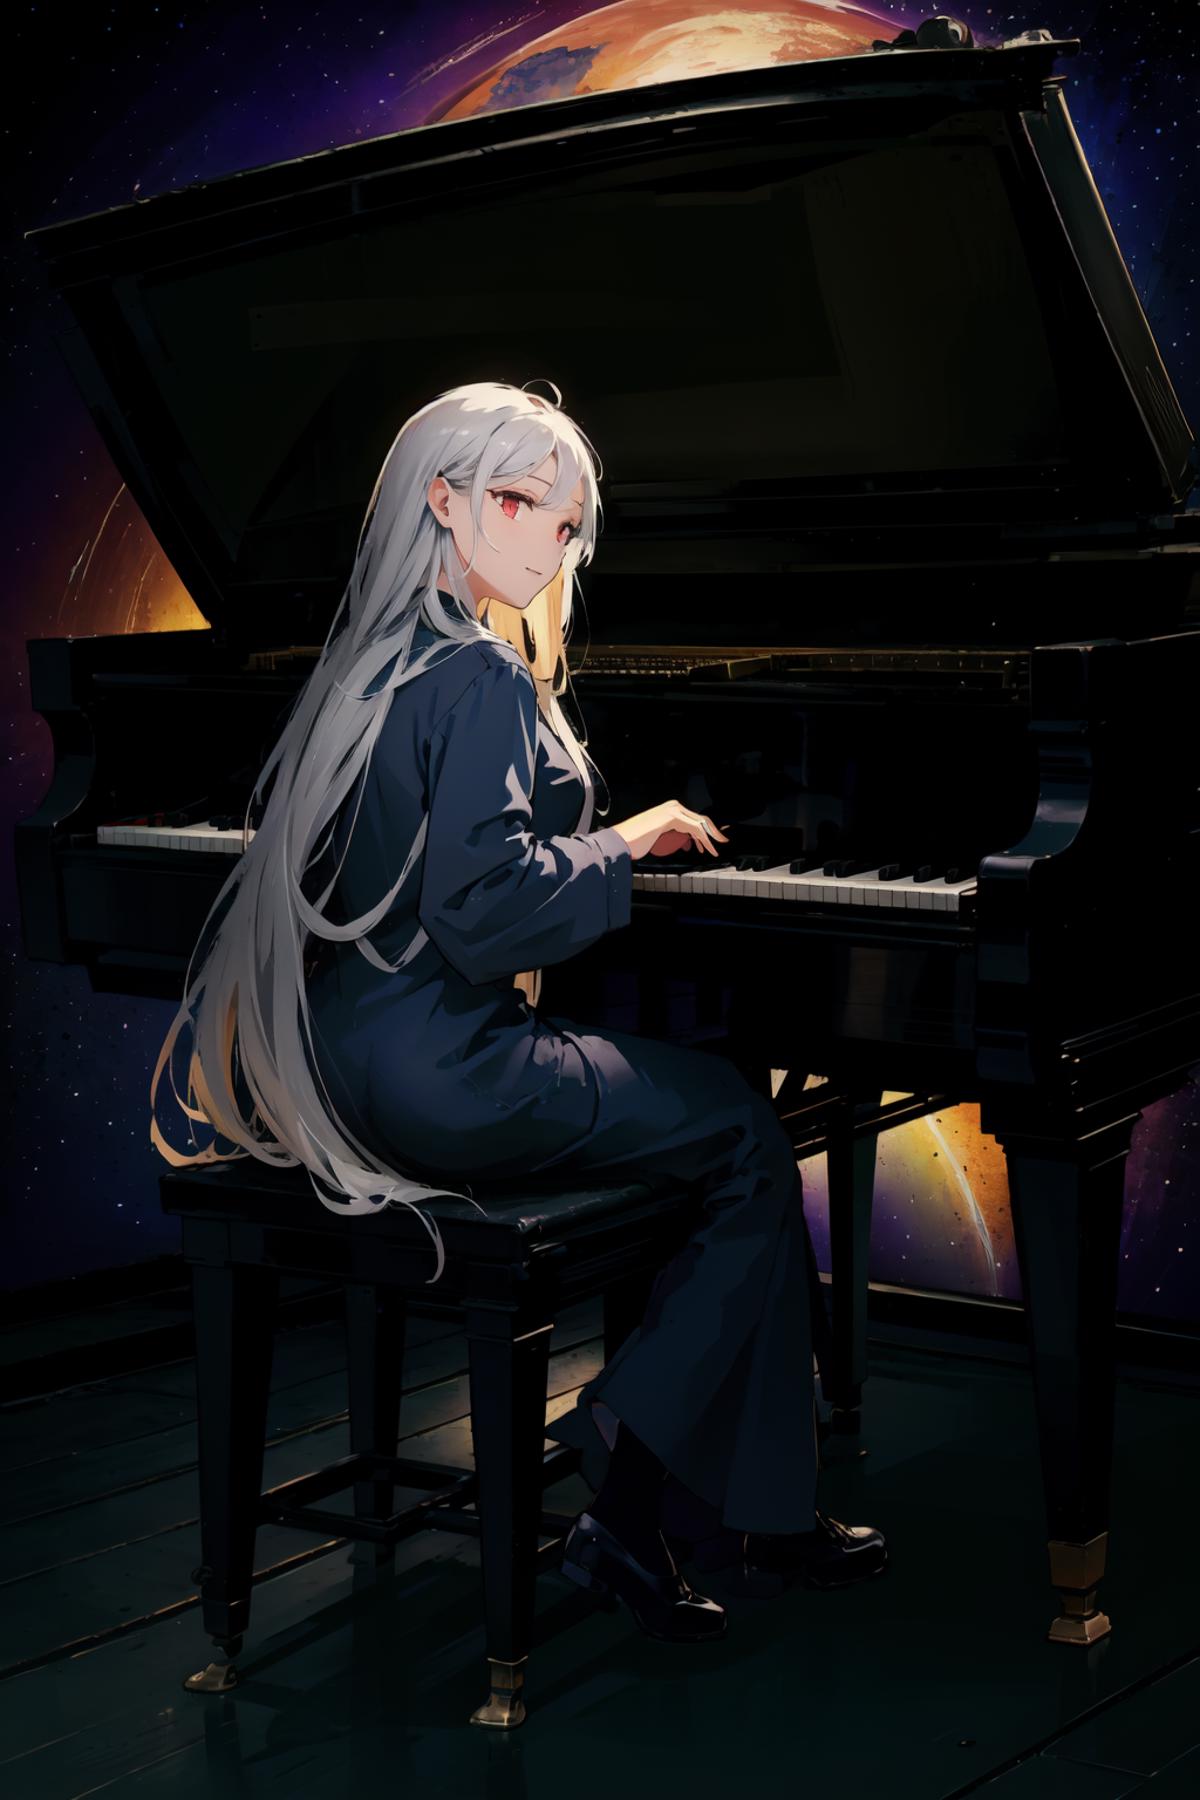 classic piano | 钢琴 image by Junbegun